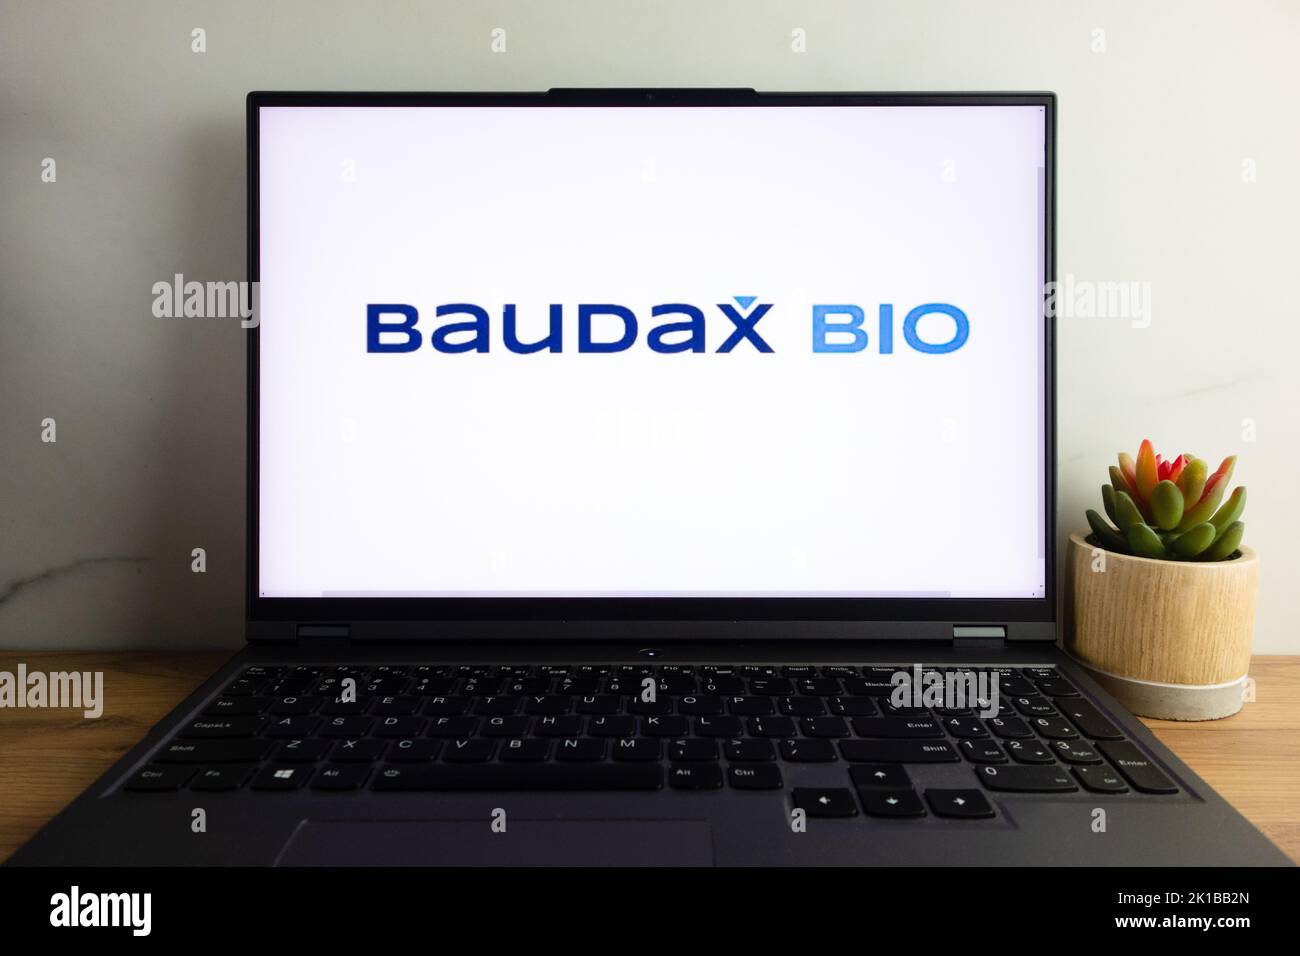 KONSKIE, POLAND - September 12, 2022: Baudax Bio company logo displayed on laptop computer screen Stock Photo